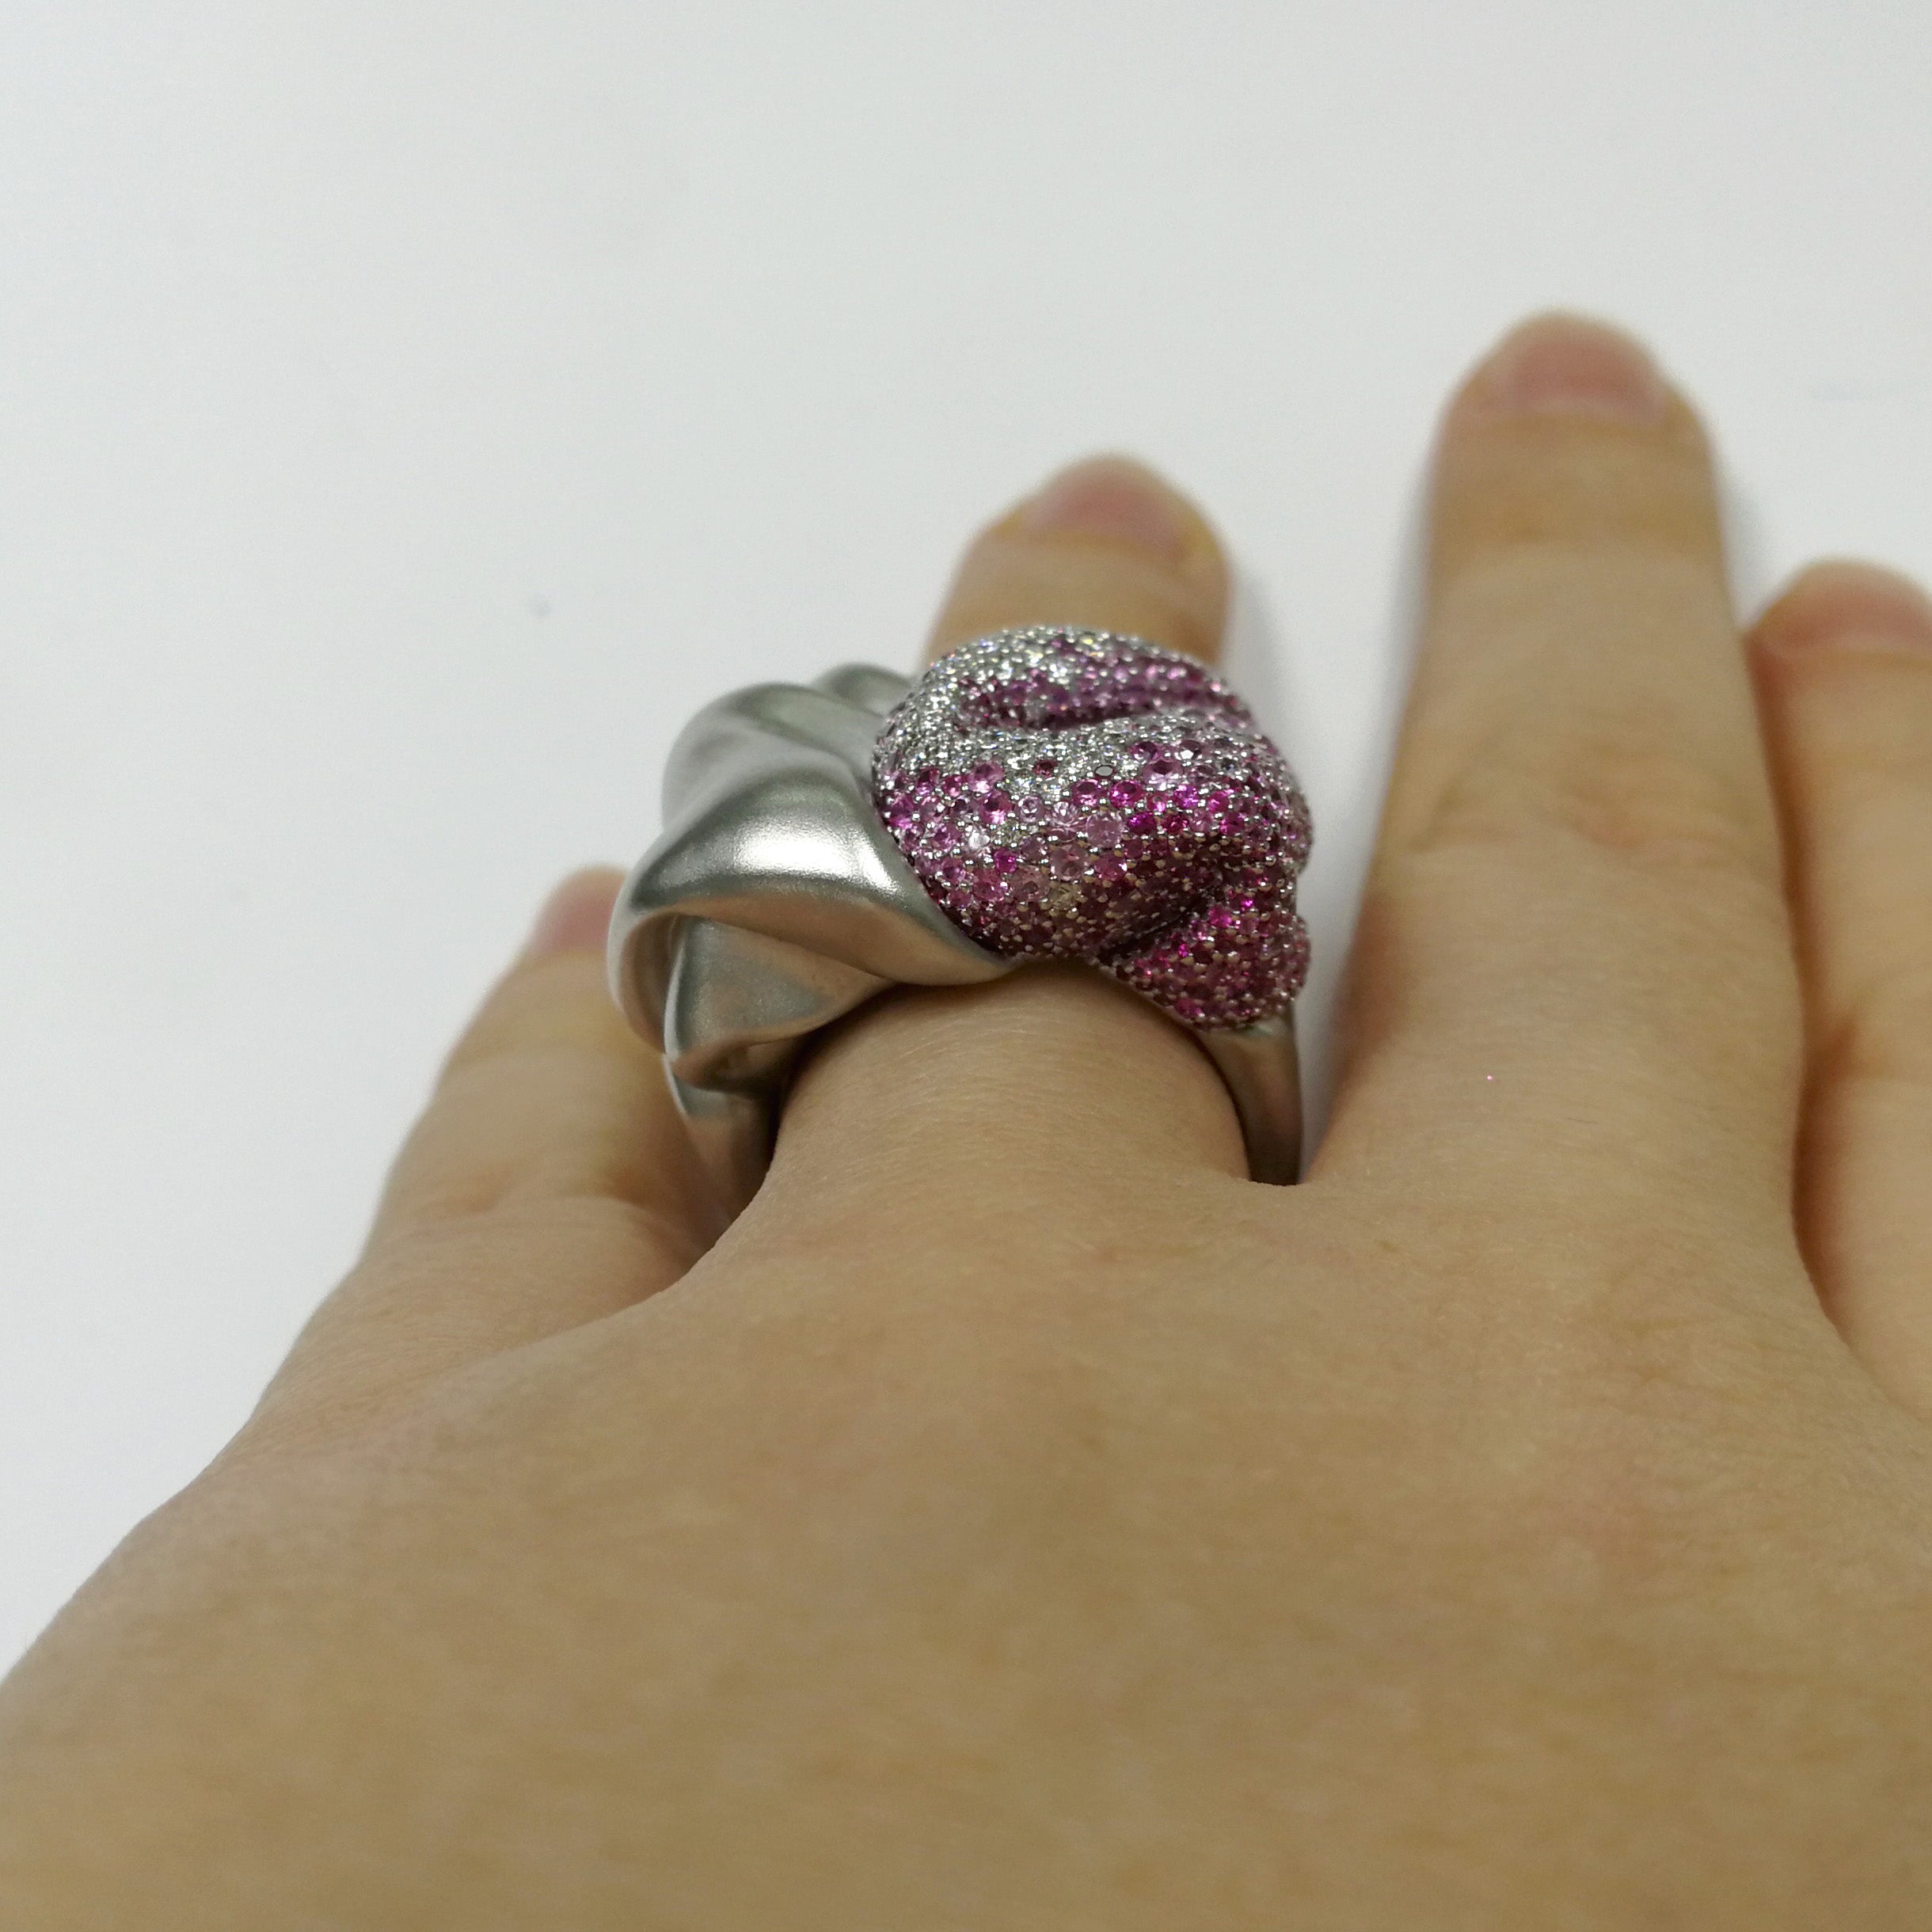 R 0132-0, 18K White Gold, Pink Sapphires, Diamonds Ring